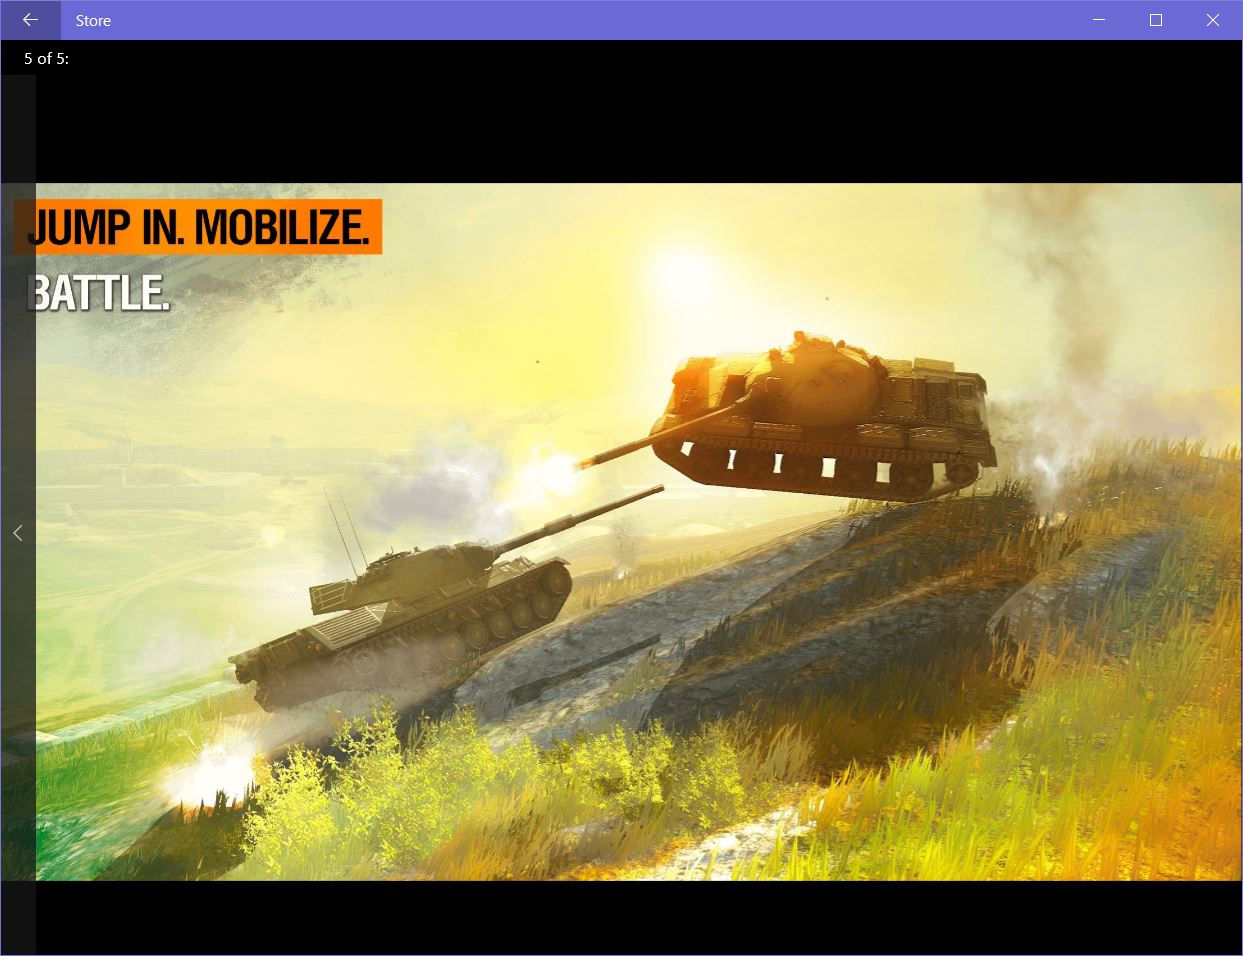 world of tanks download pc windows 10